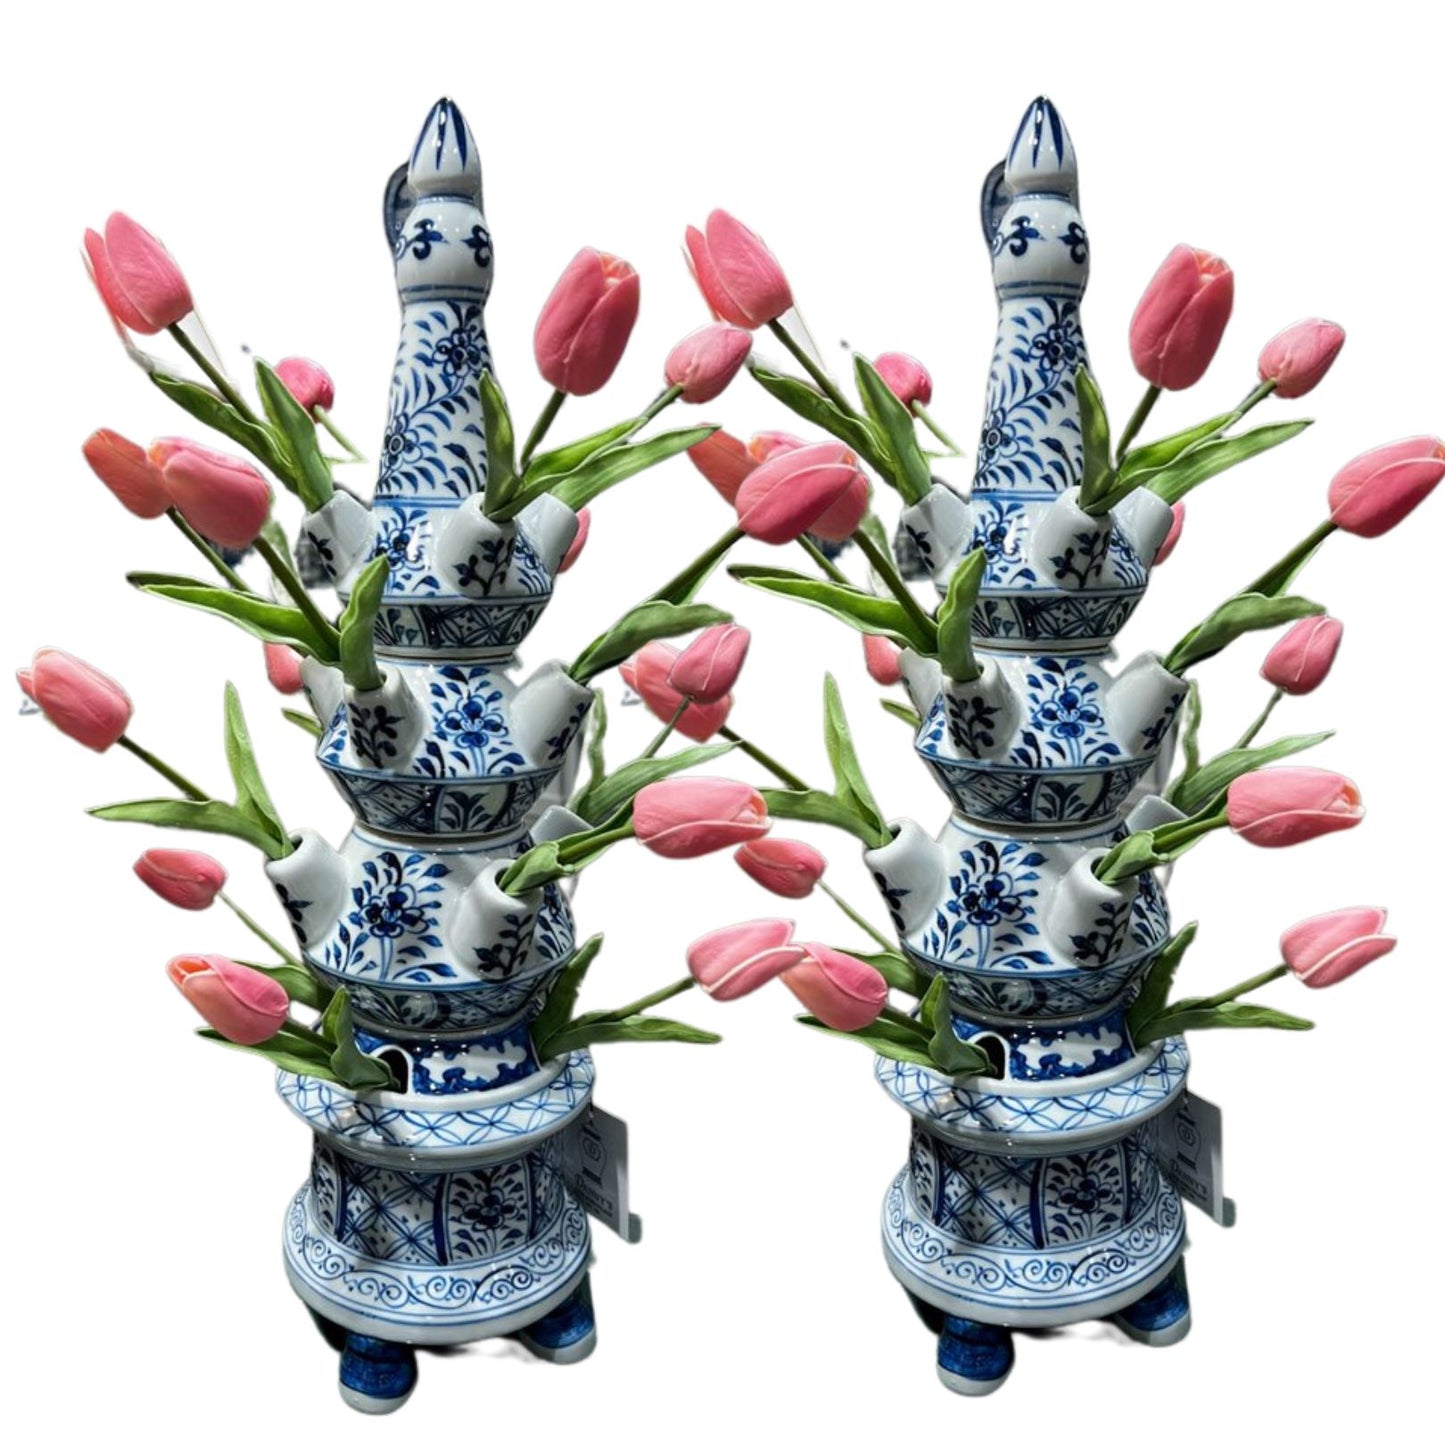 NEW - Stunning Blue & White Floral, 22" Tall Tulipiere Vase